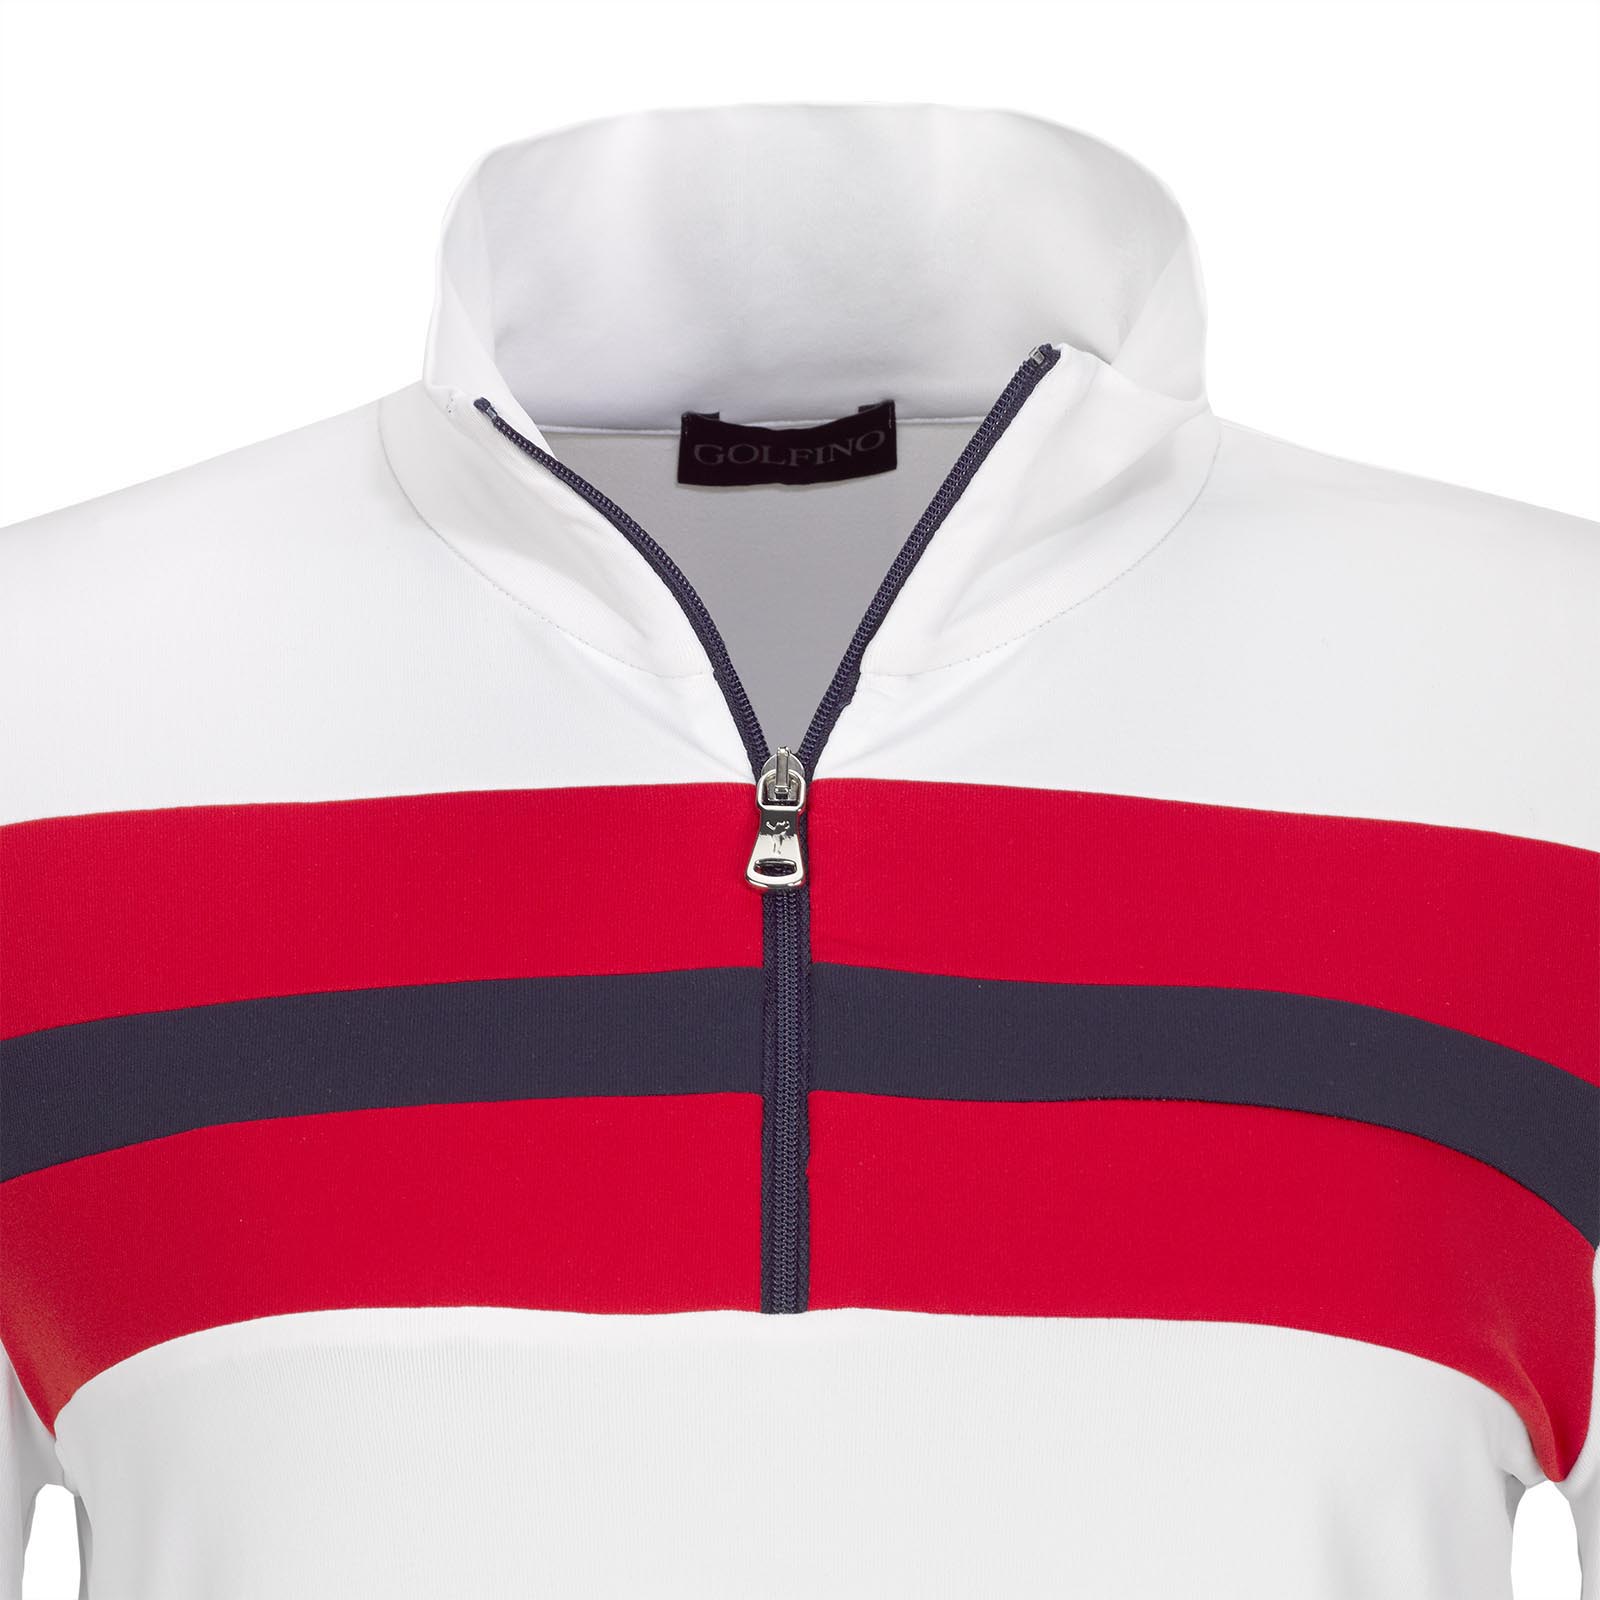 Damen Longsleeve Retro Sport Golf-Troyer Dry Comfort in Slim Fit